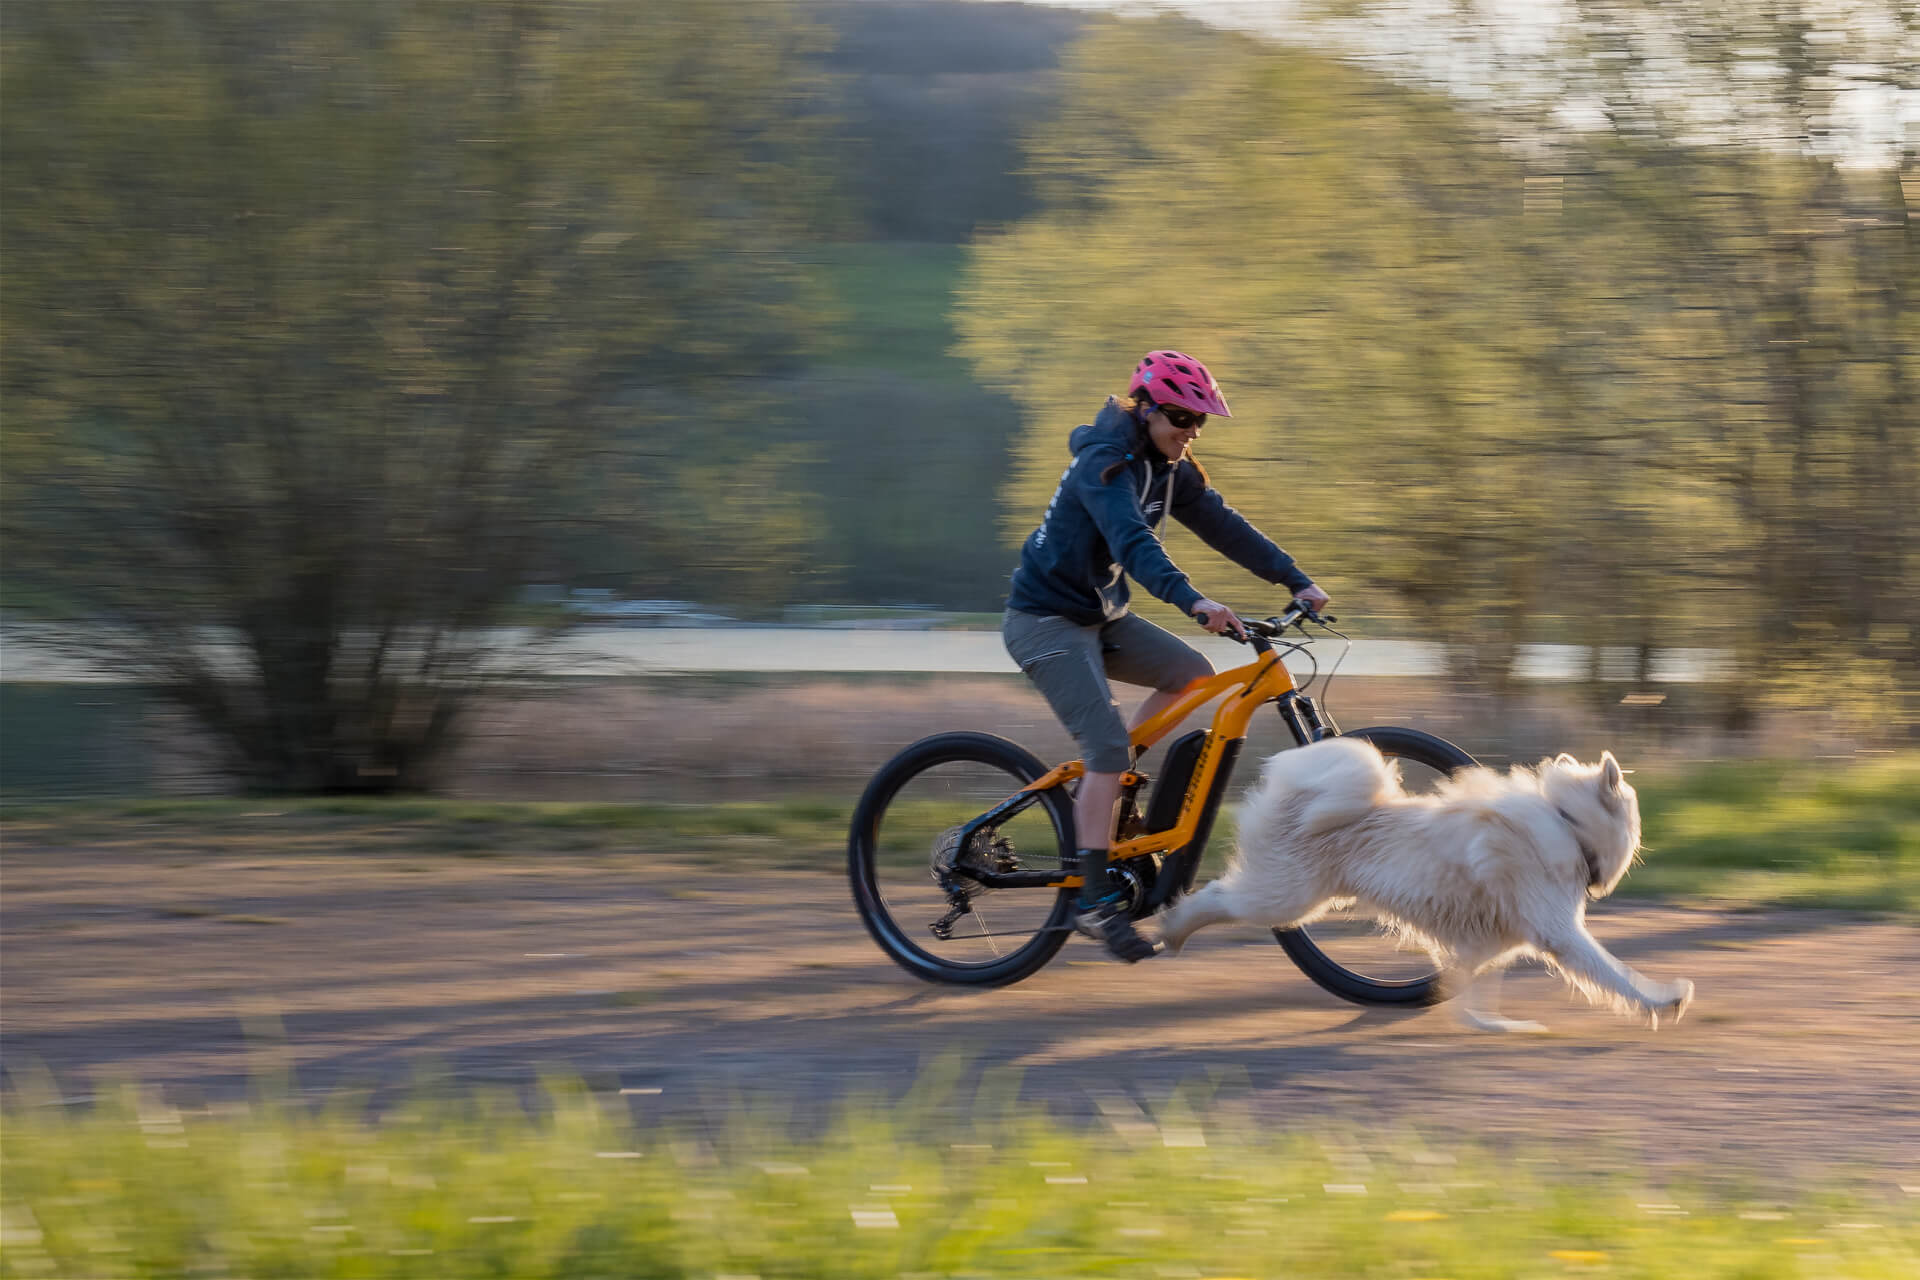 Caroline Delattre riding her Haibike AllMtn 4 eMTB with her dog running next to her